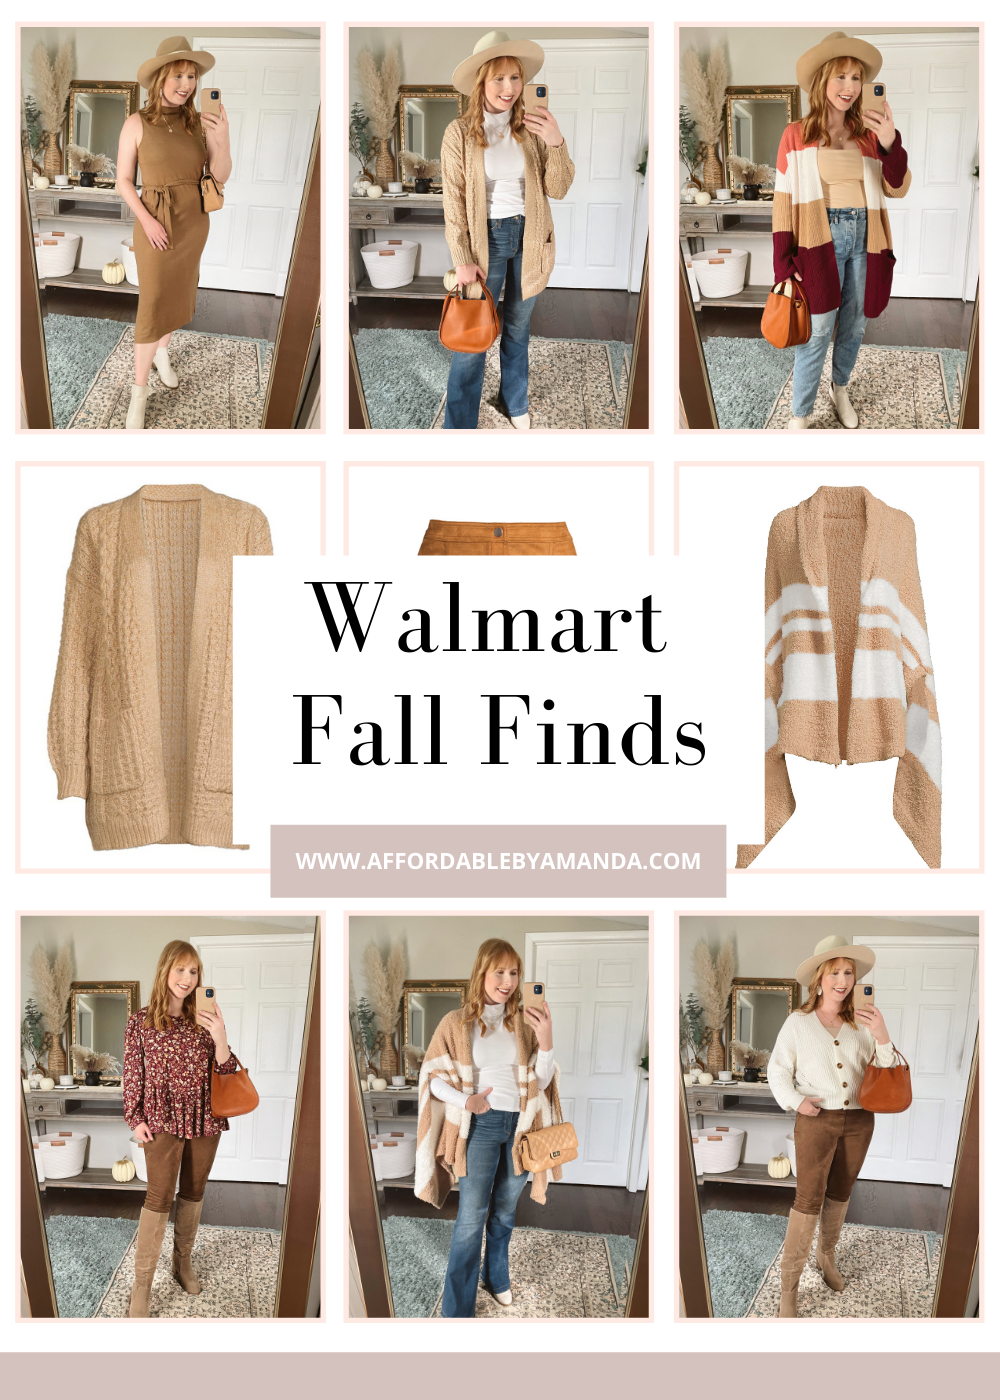 Walmart Fall Finds - Affordable by Amanda